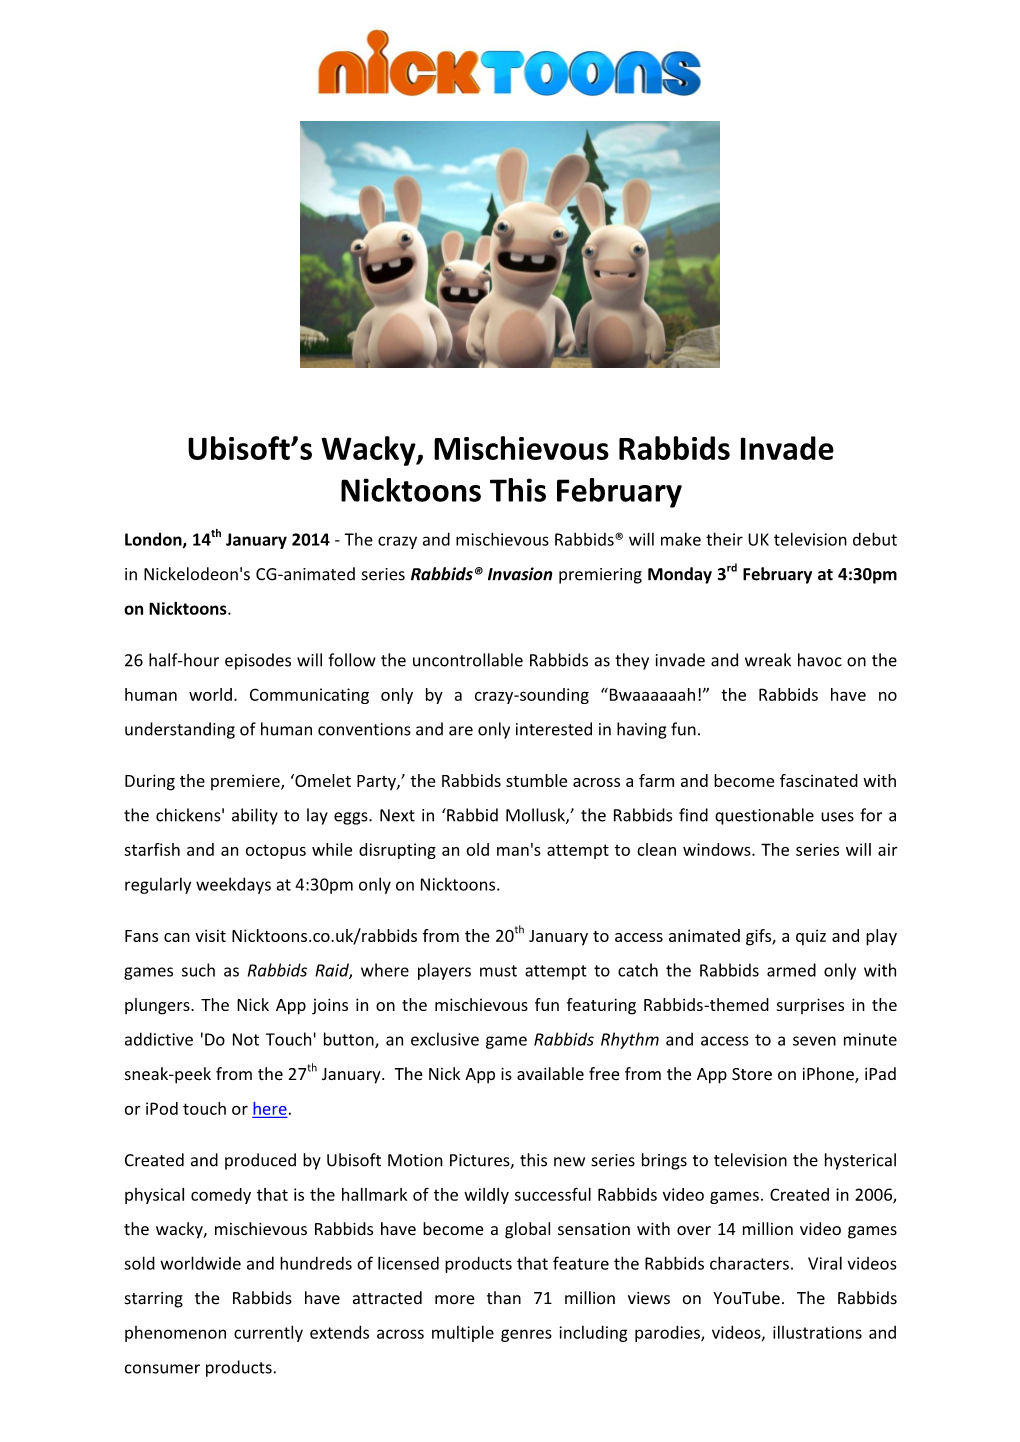 Ubisoft's Wacky, Mischievous Rabbids Invade Nicktoons This February